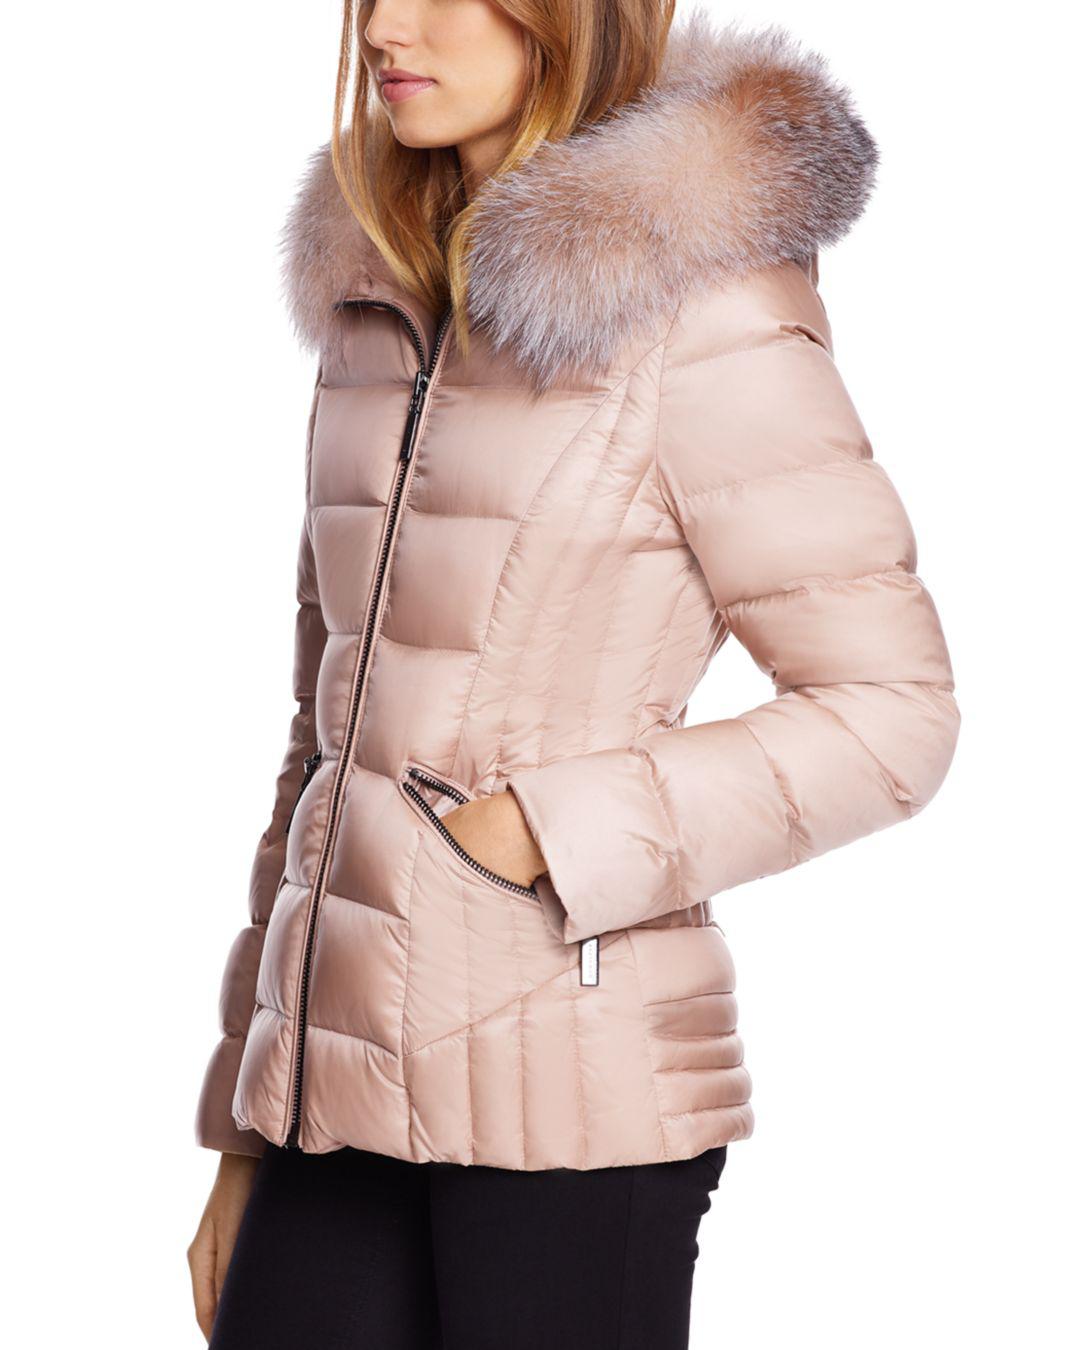 Dawn Levy Nikki Saga Fur Trim Short Down Coat in French Pink (Pink) - Lyst